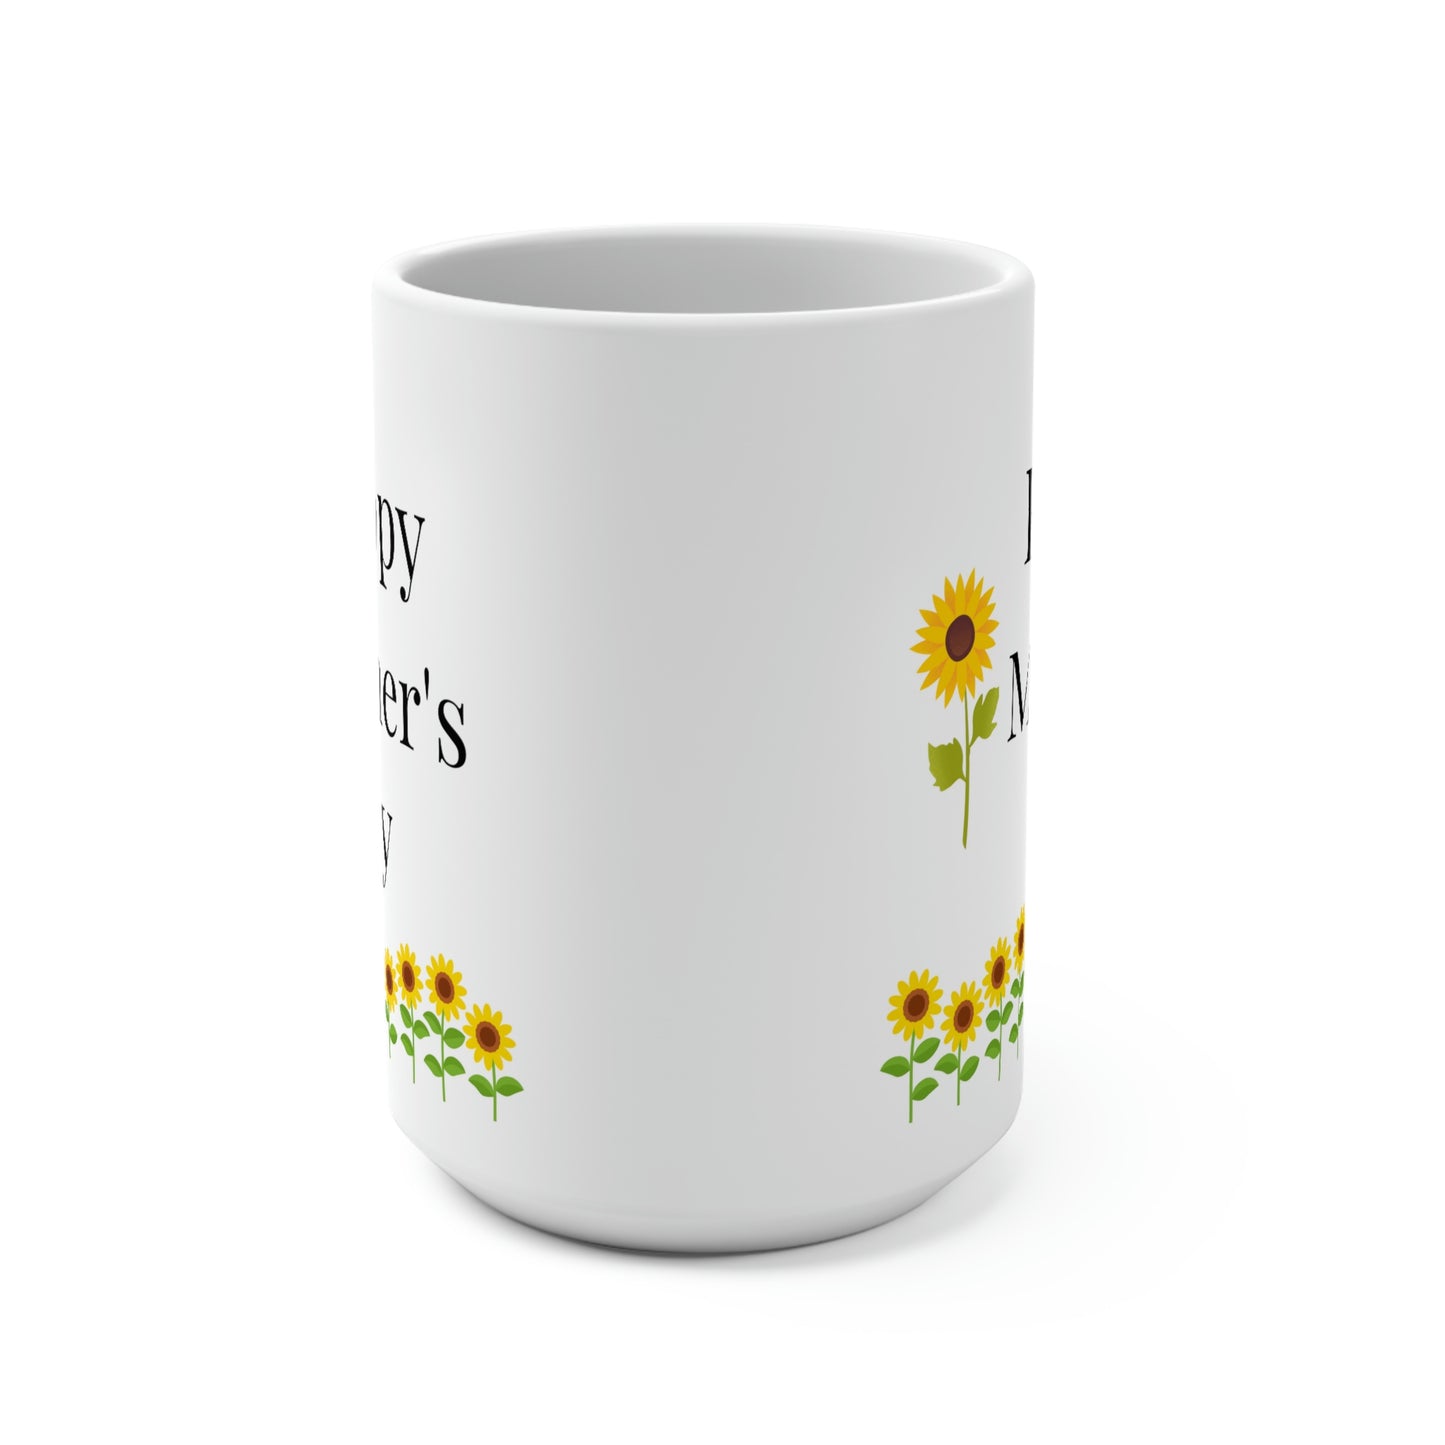 Happy Mother's Day Coffee Mug, Mother's Day Mug, Sunflower Coffee Mug, Mother's Day Sunflower Gift Ideas